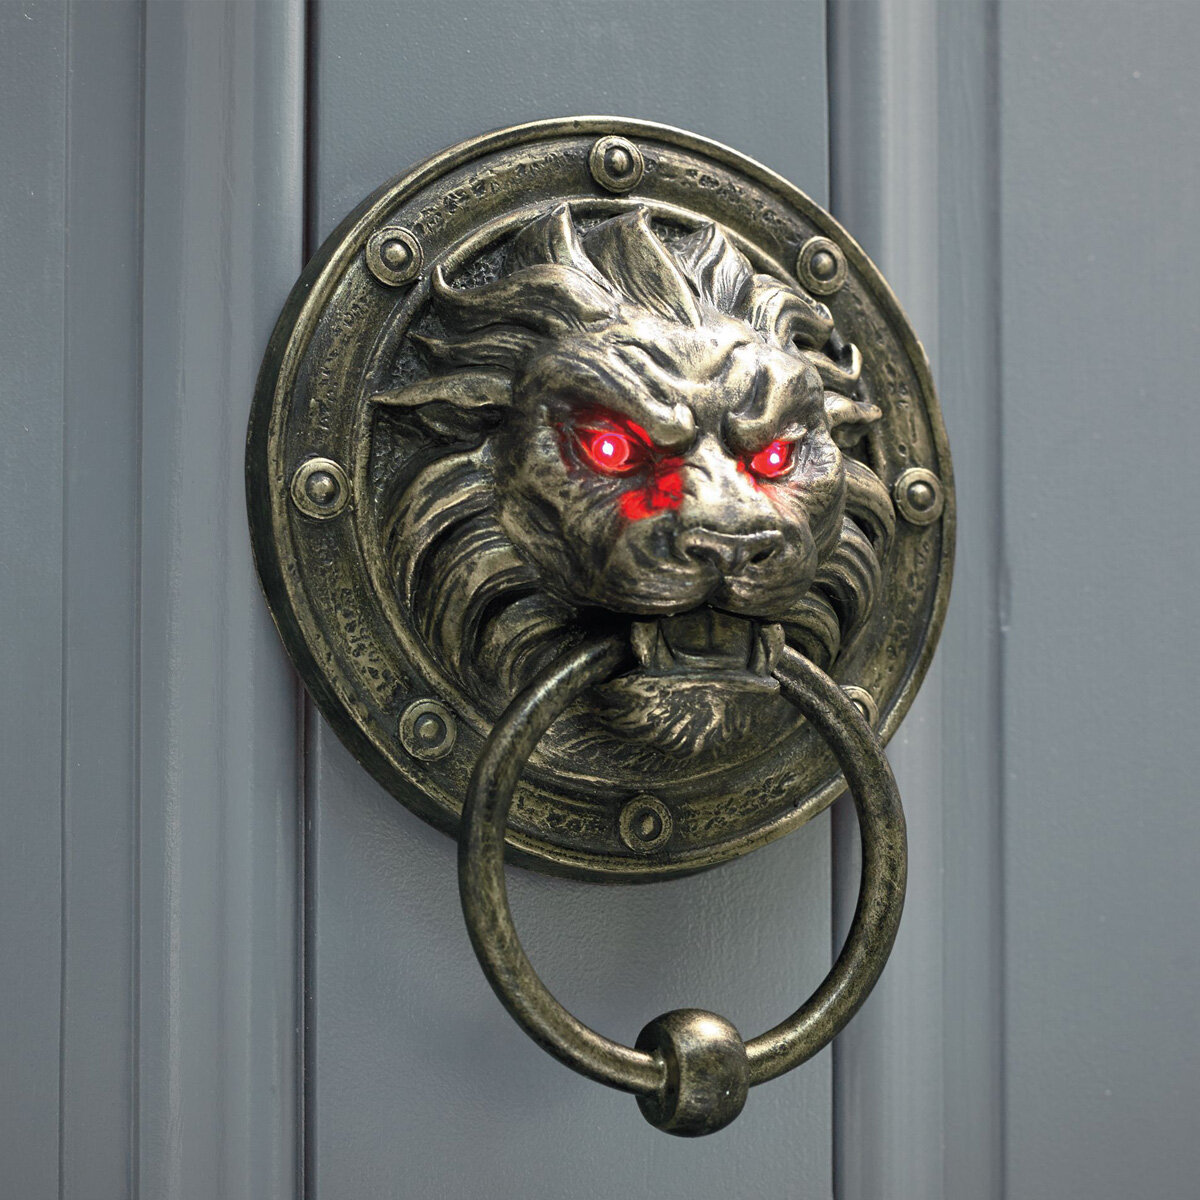 glowing-eyes-lion-door-knocker-1.jpg